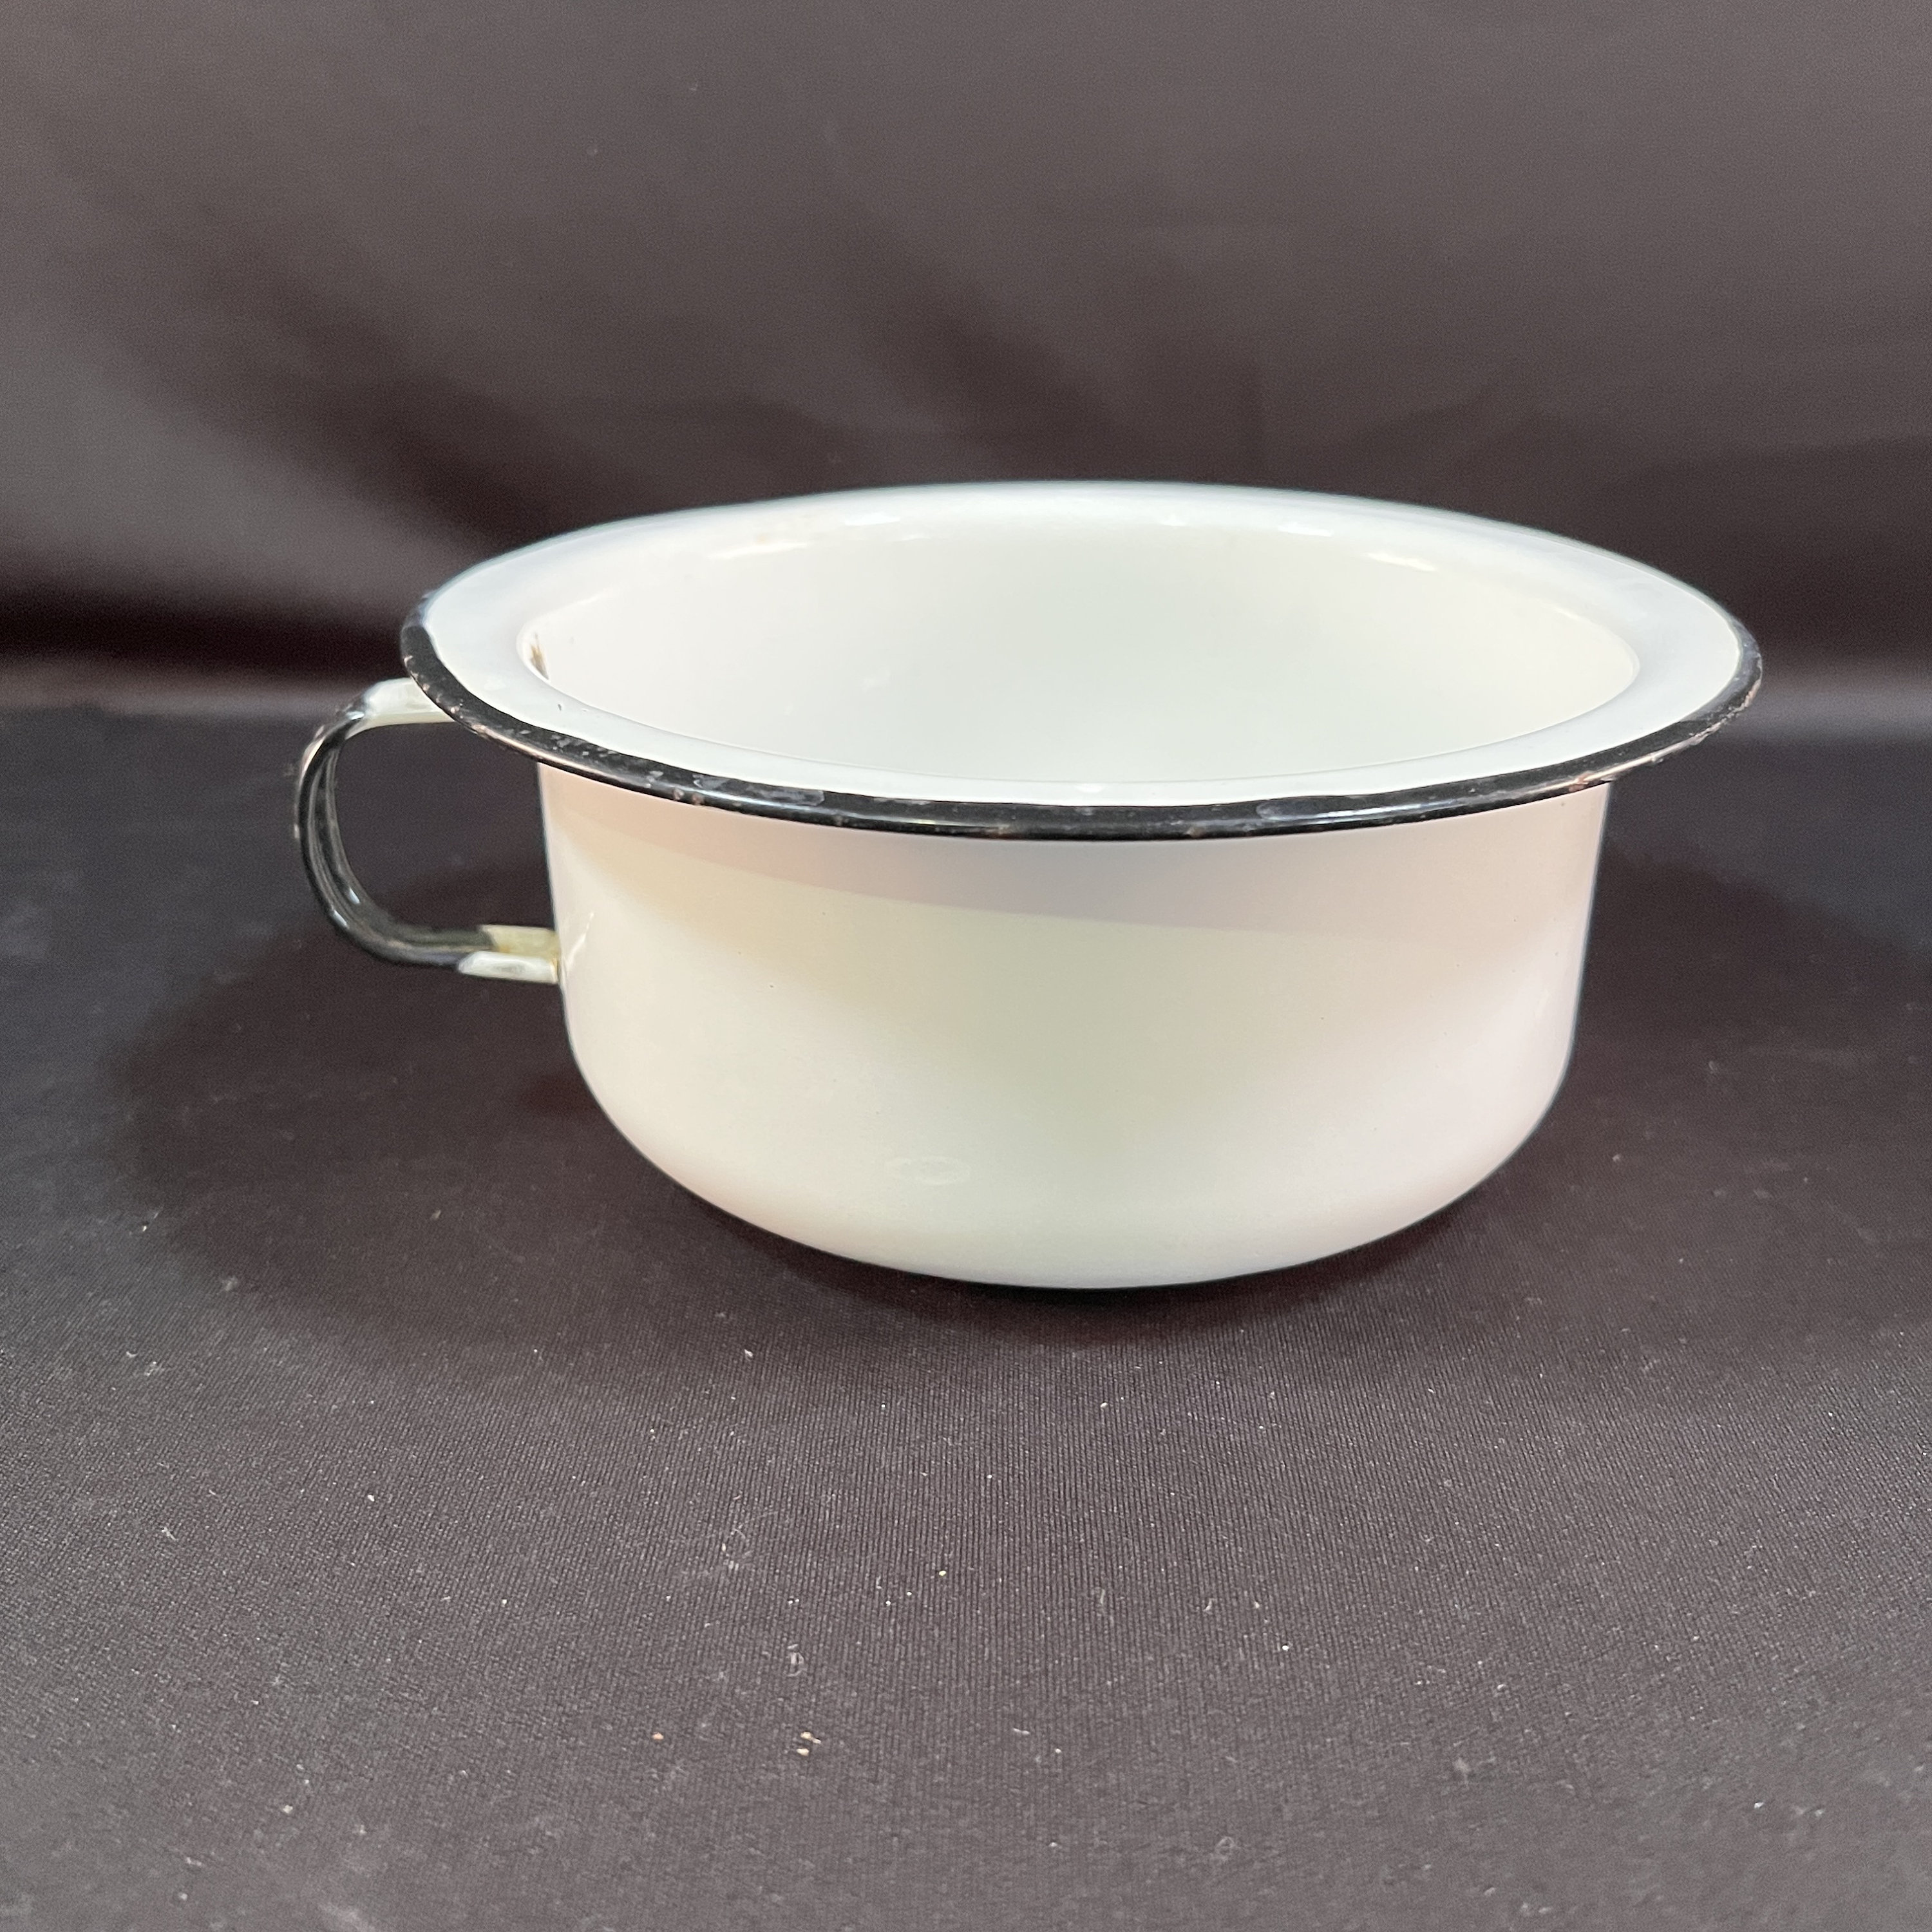 Columbian Home Products 6124-2 15-1/2Quart Ceramic Stock Pot,  Black